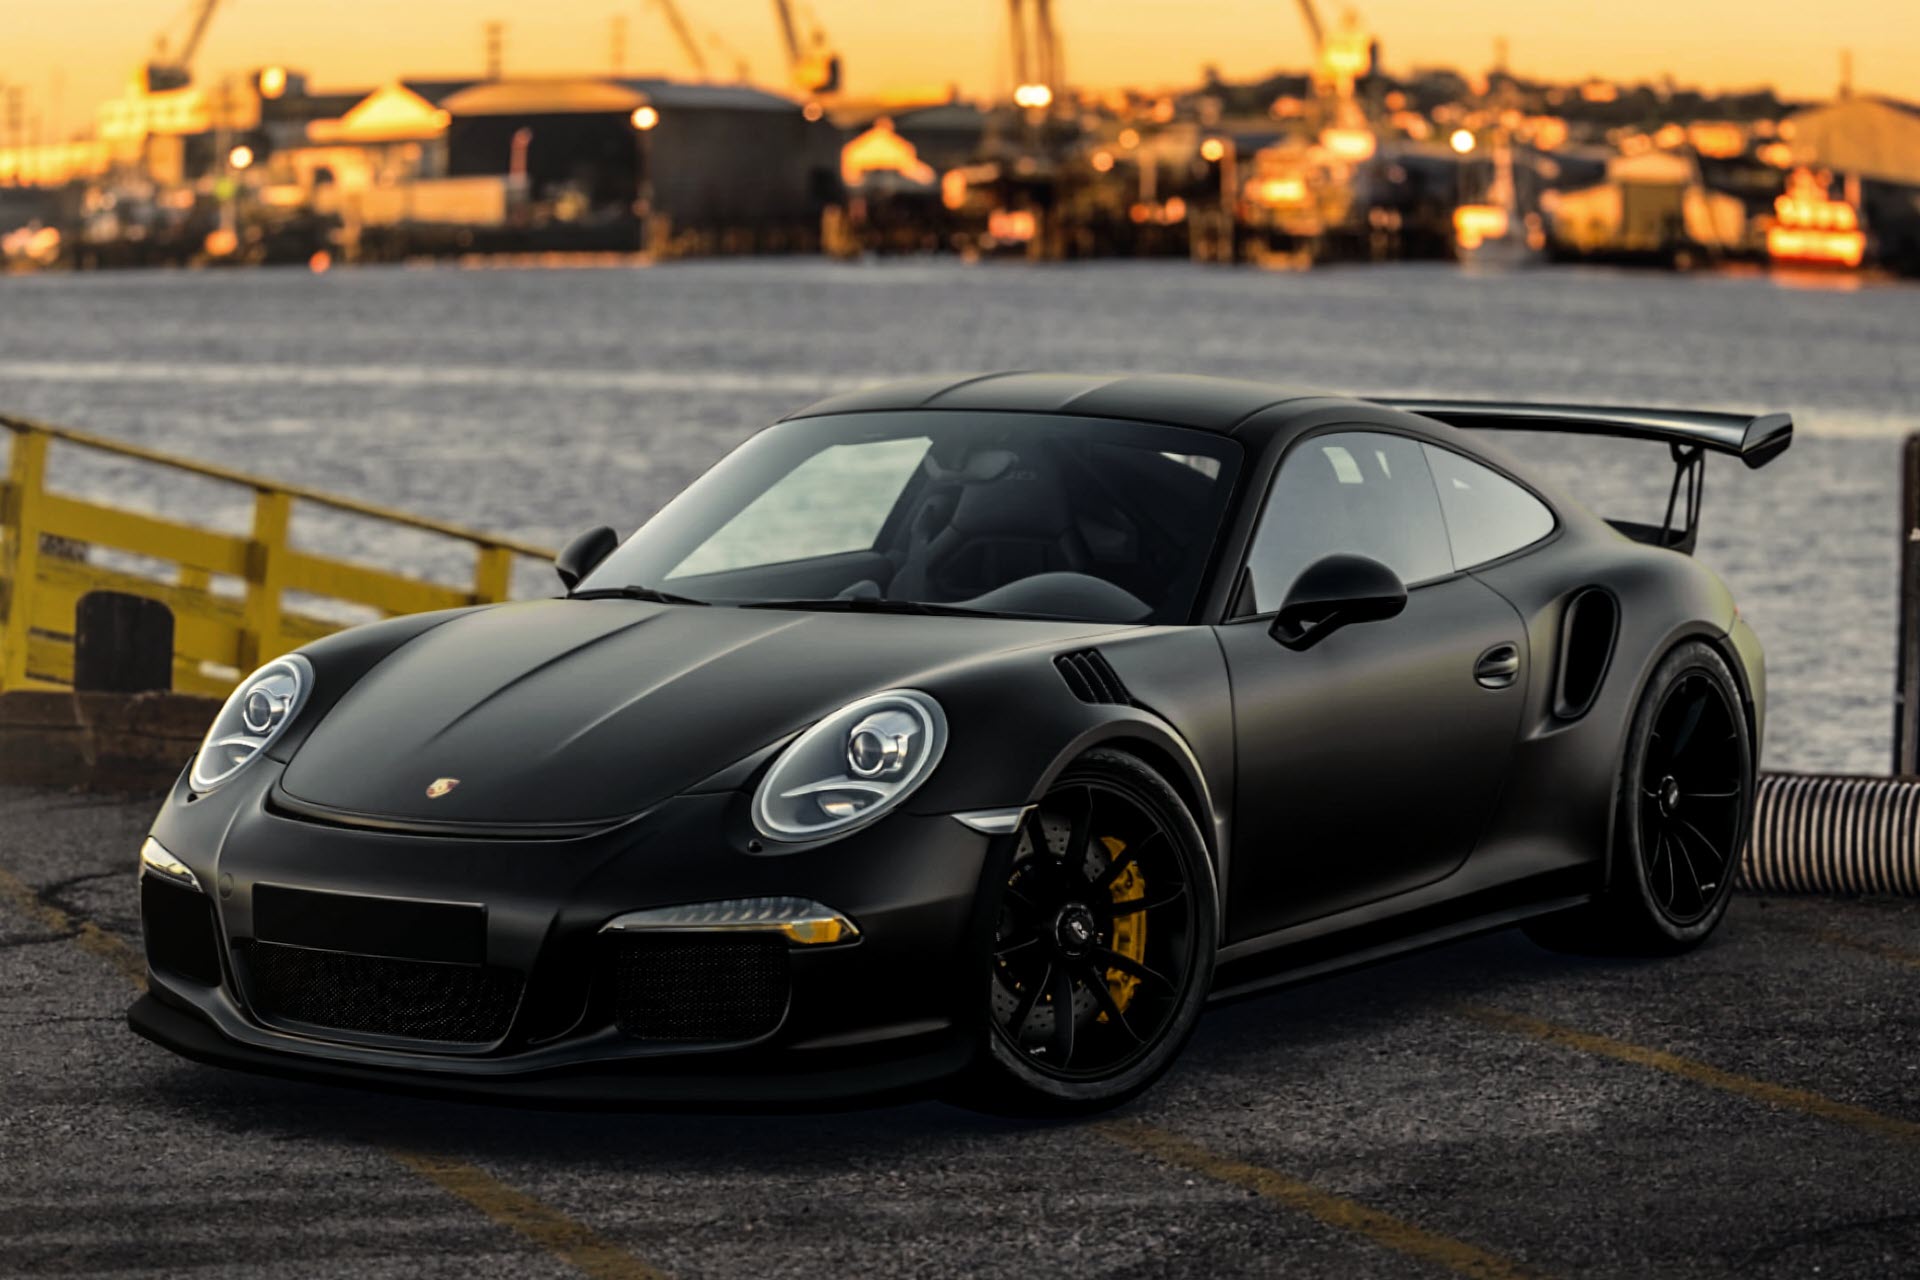 Hình nền Porsche 911 cực đẹp